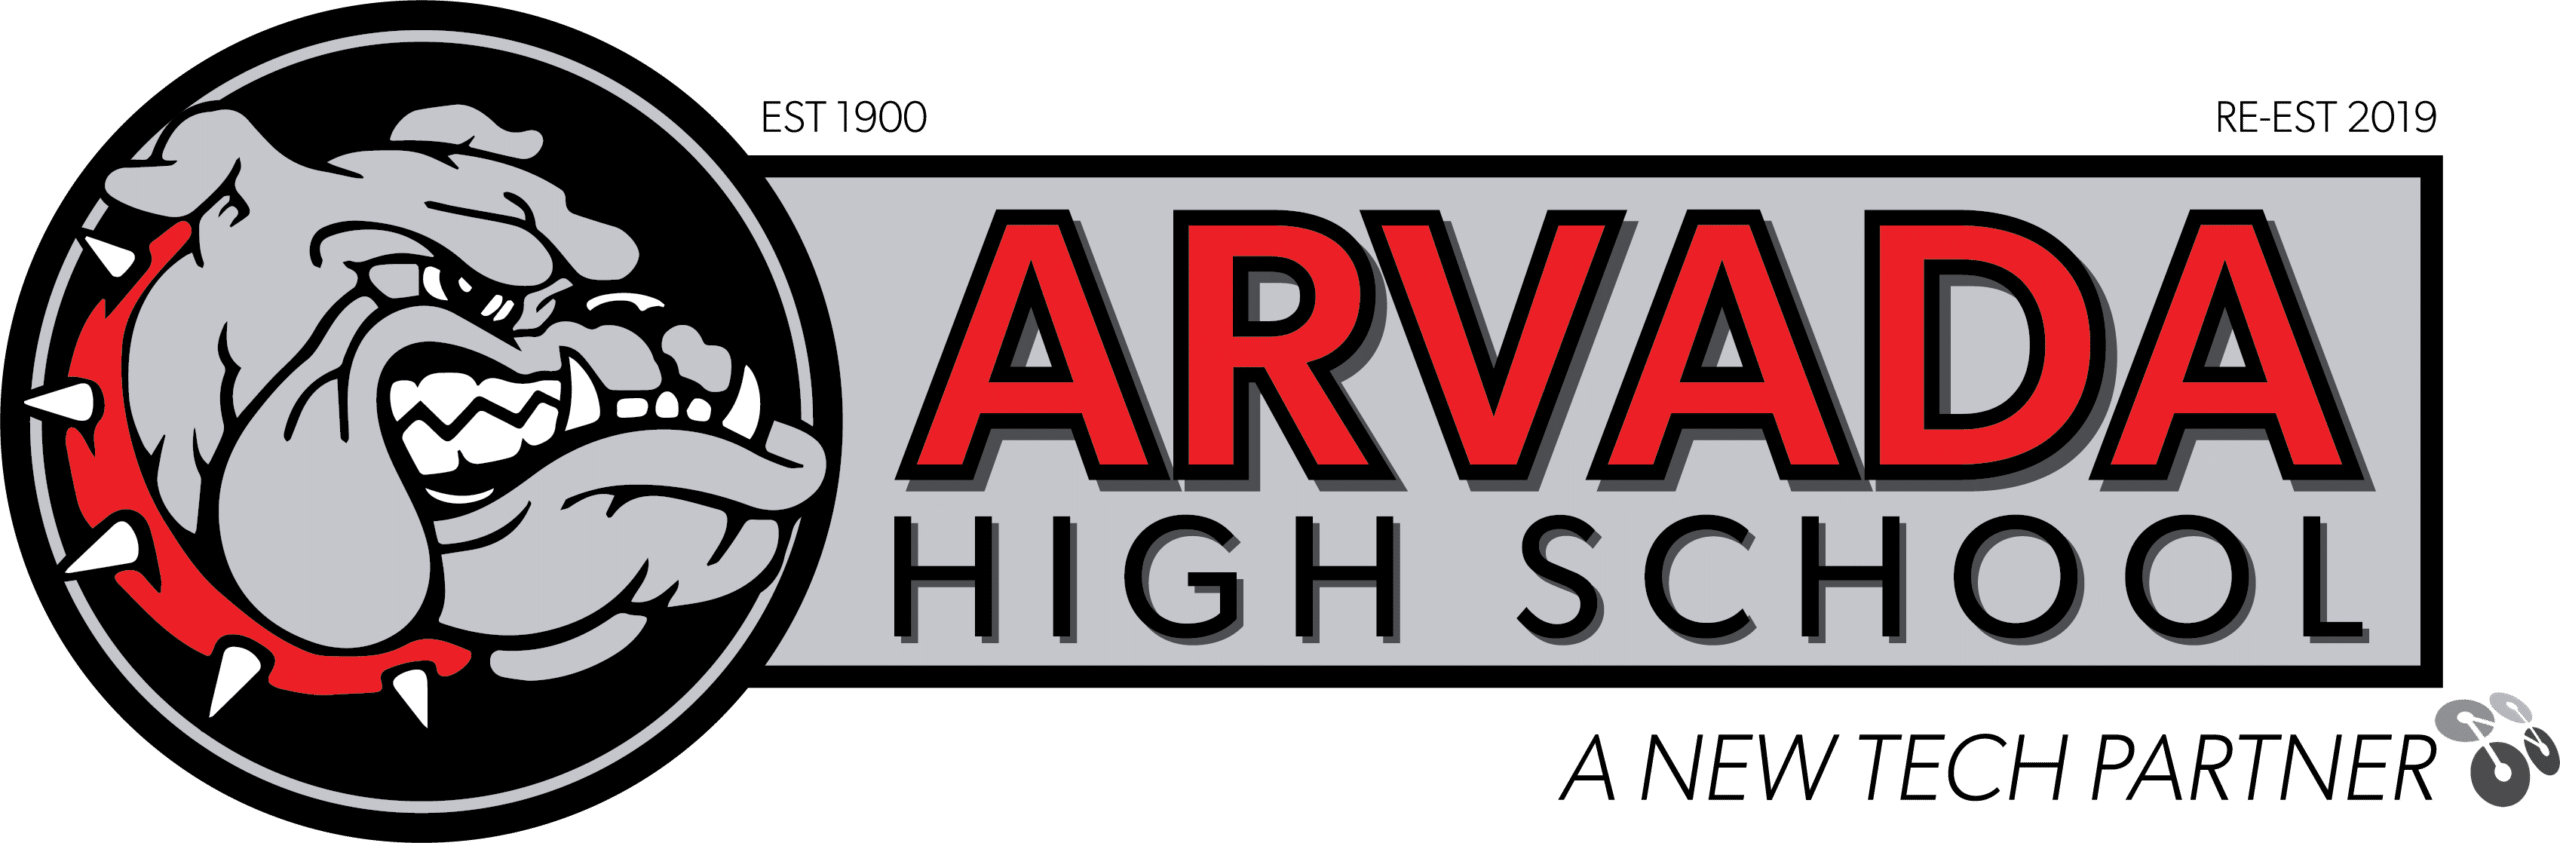 Image of logo of Arvada High School